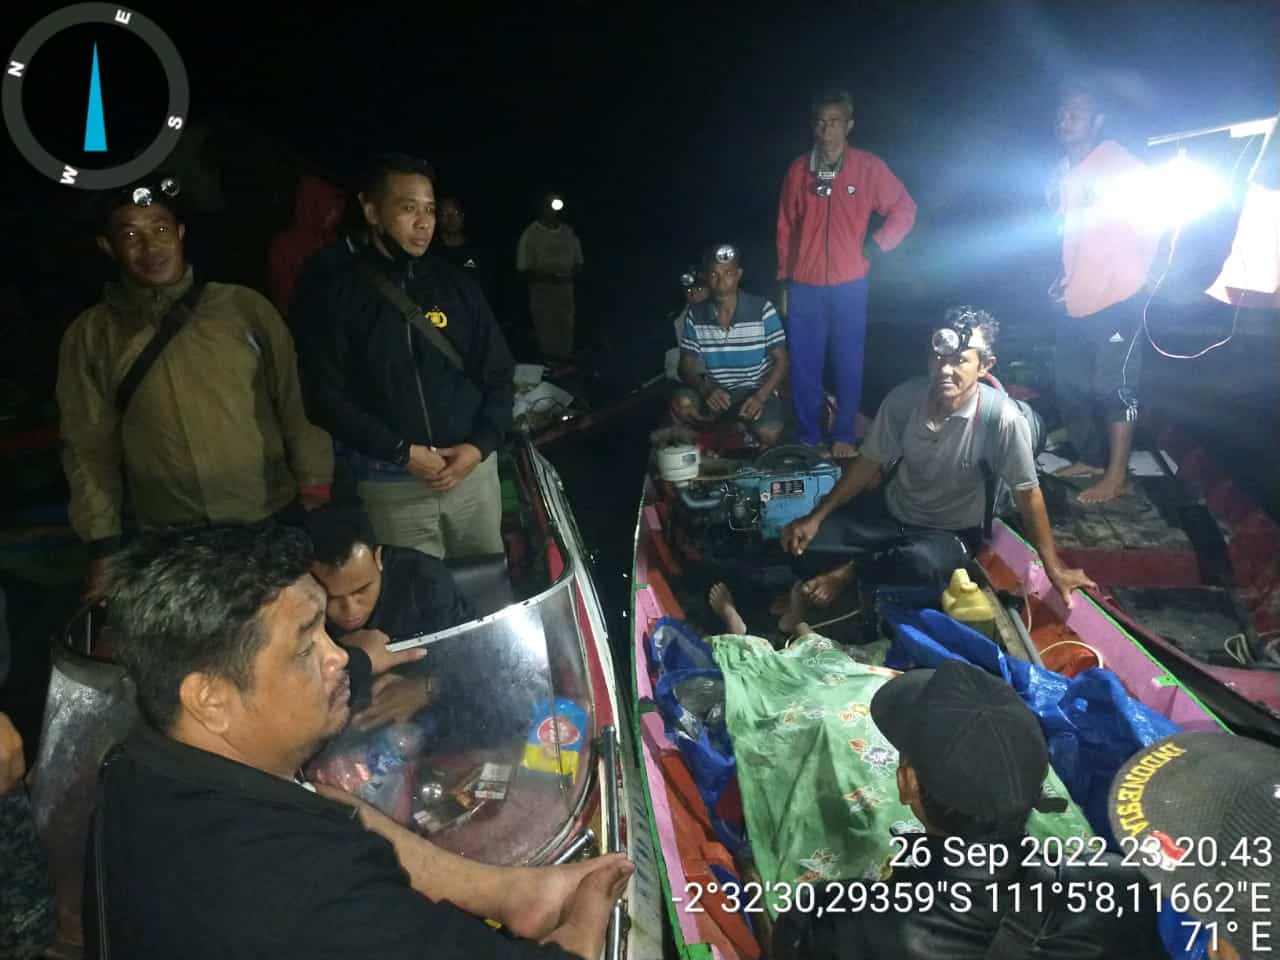 Evakuasi kedua jenazah korban oleh tim gabungan bersama warga setempat. (Foto: Adi LC)